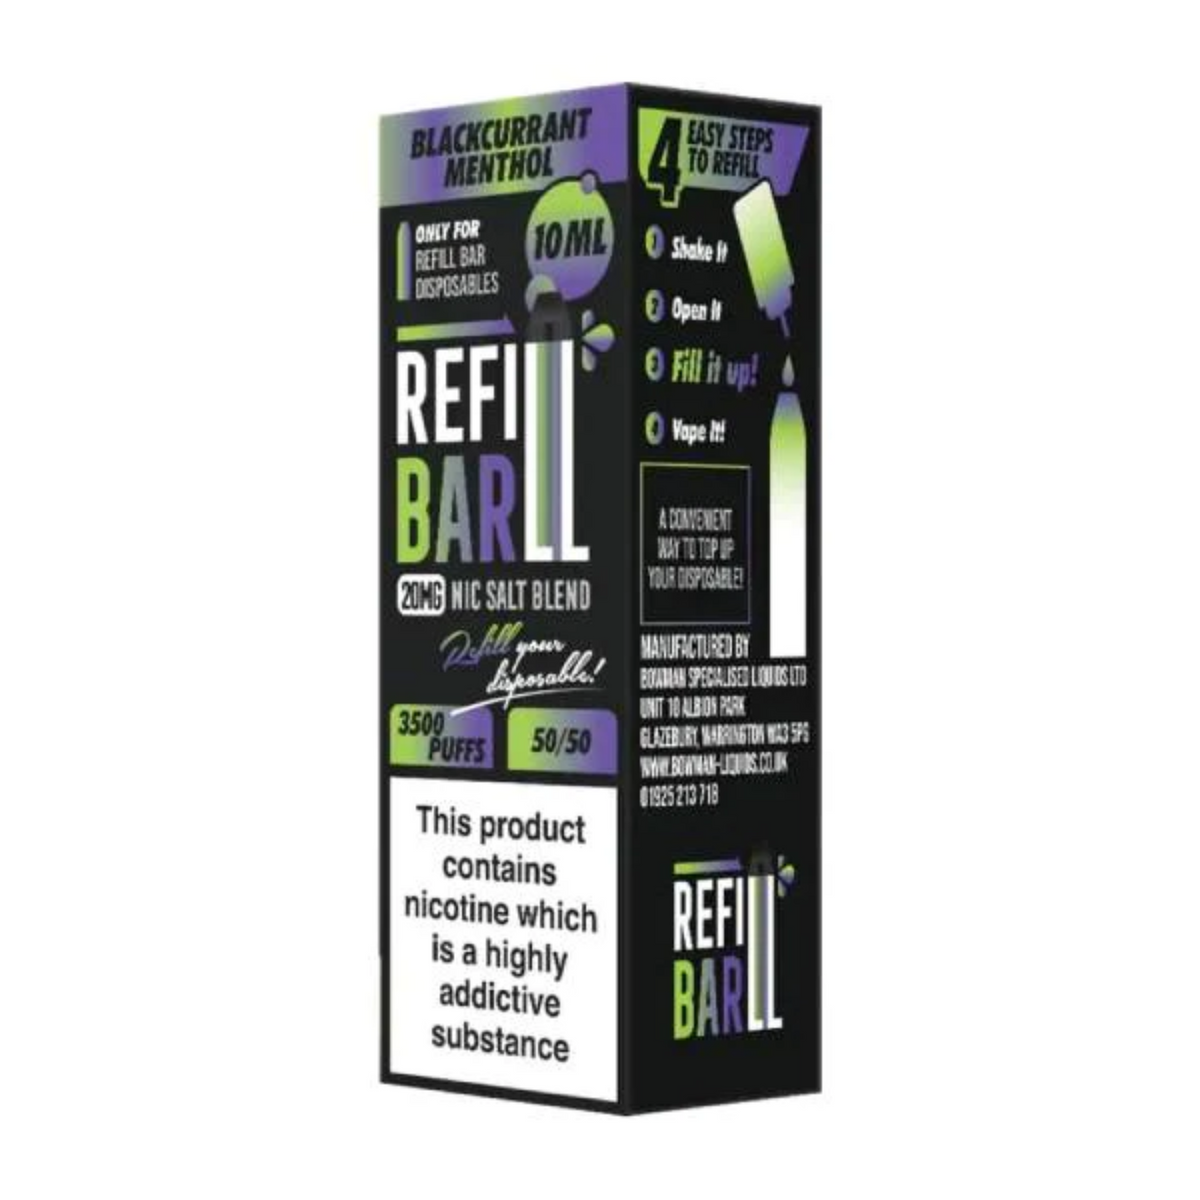 Refill Bar - Blackcurrant Menthol 10ml